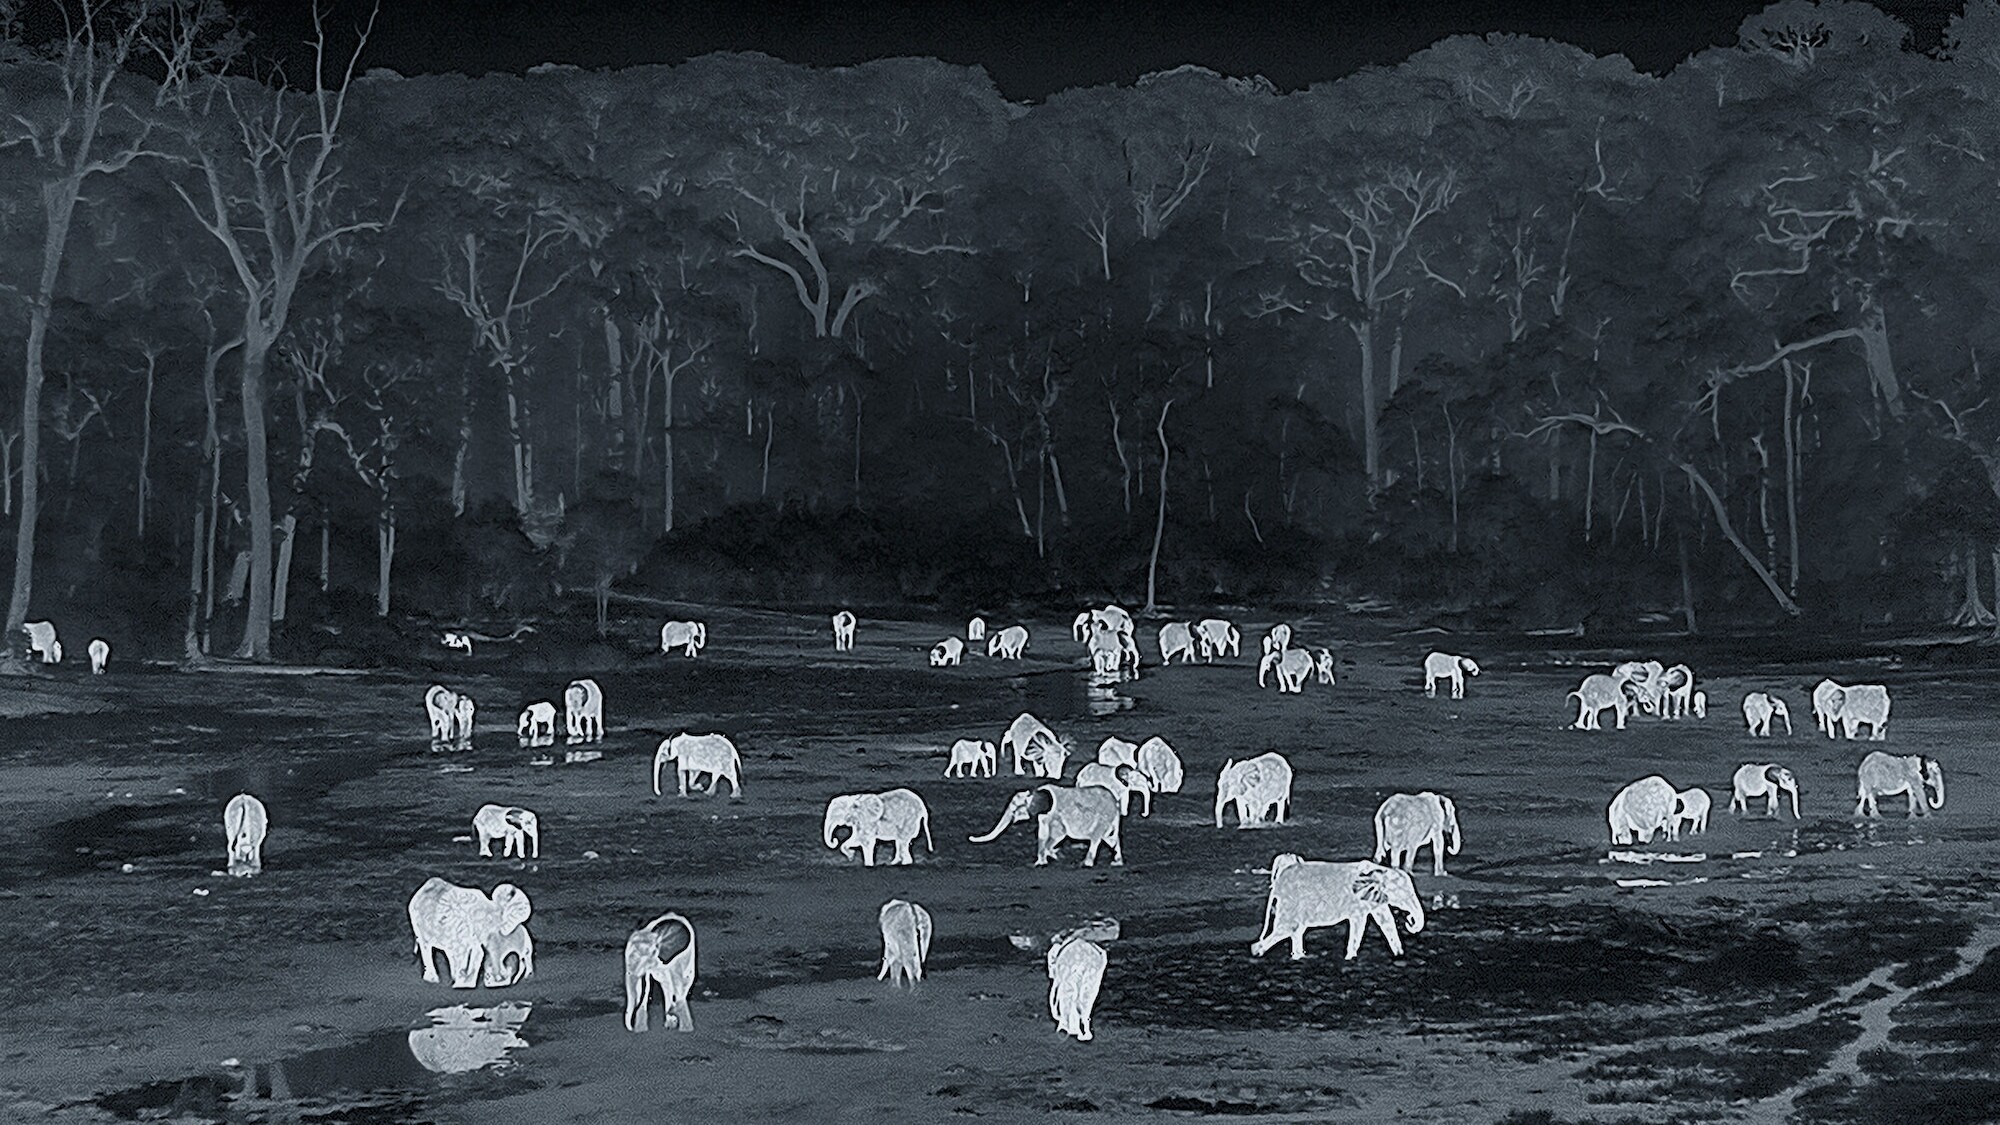 Night-cam image of Elephants in Dzanga Bai. (National Geographic for Disney+/Bertie Gregory)